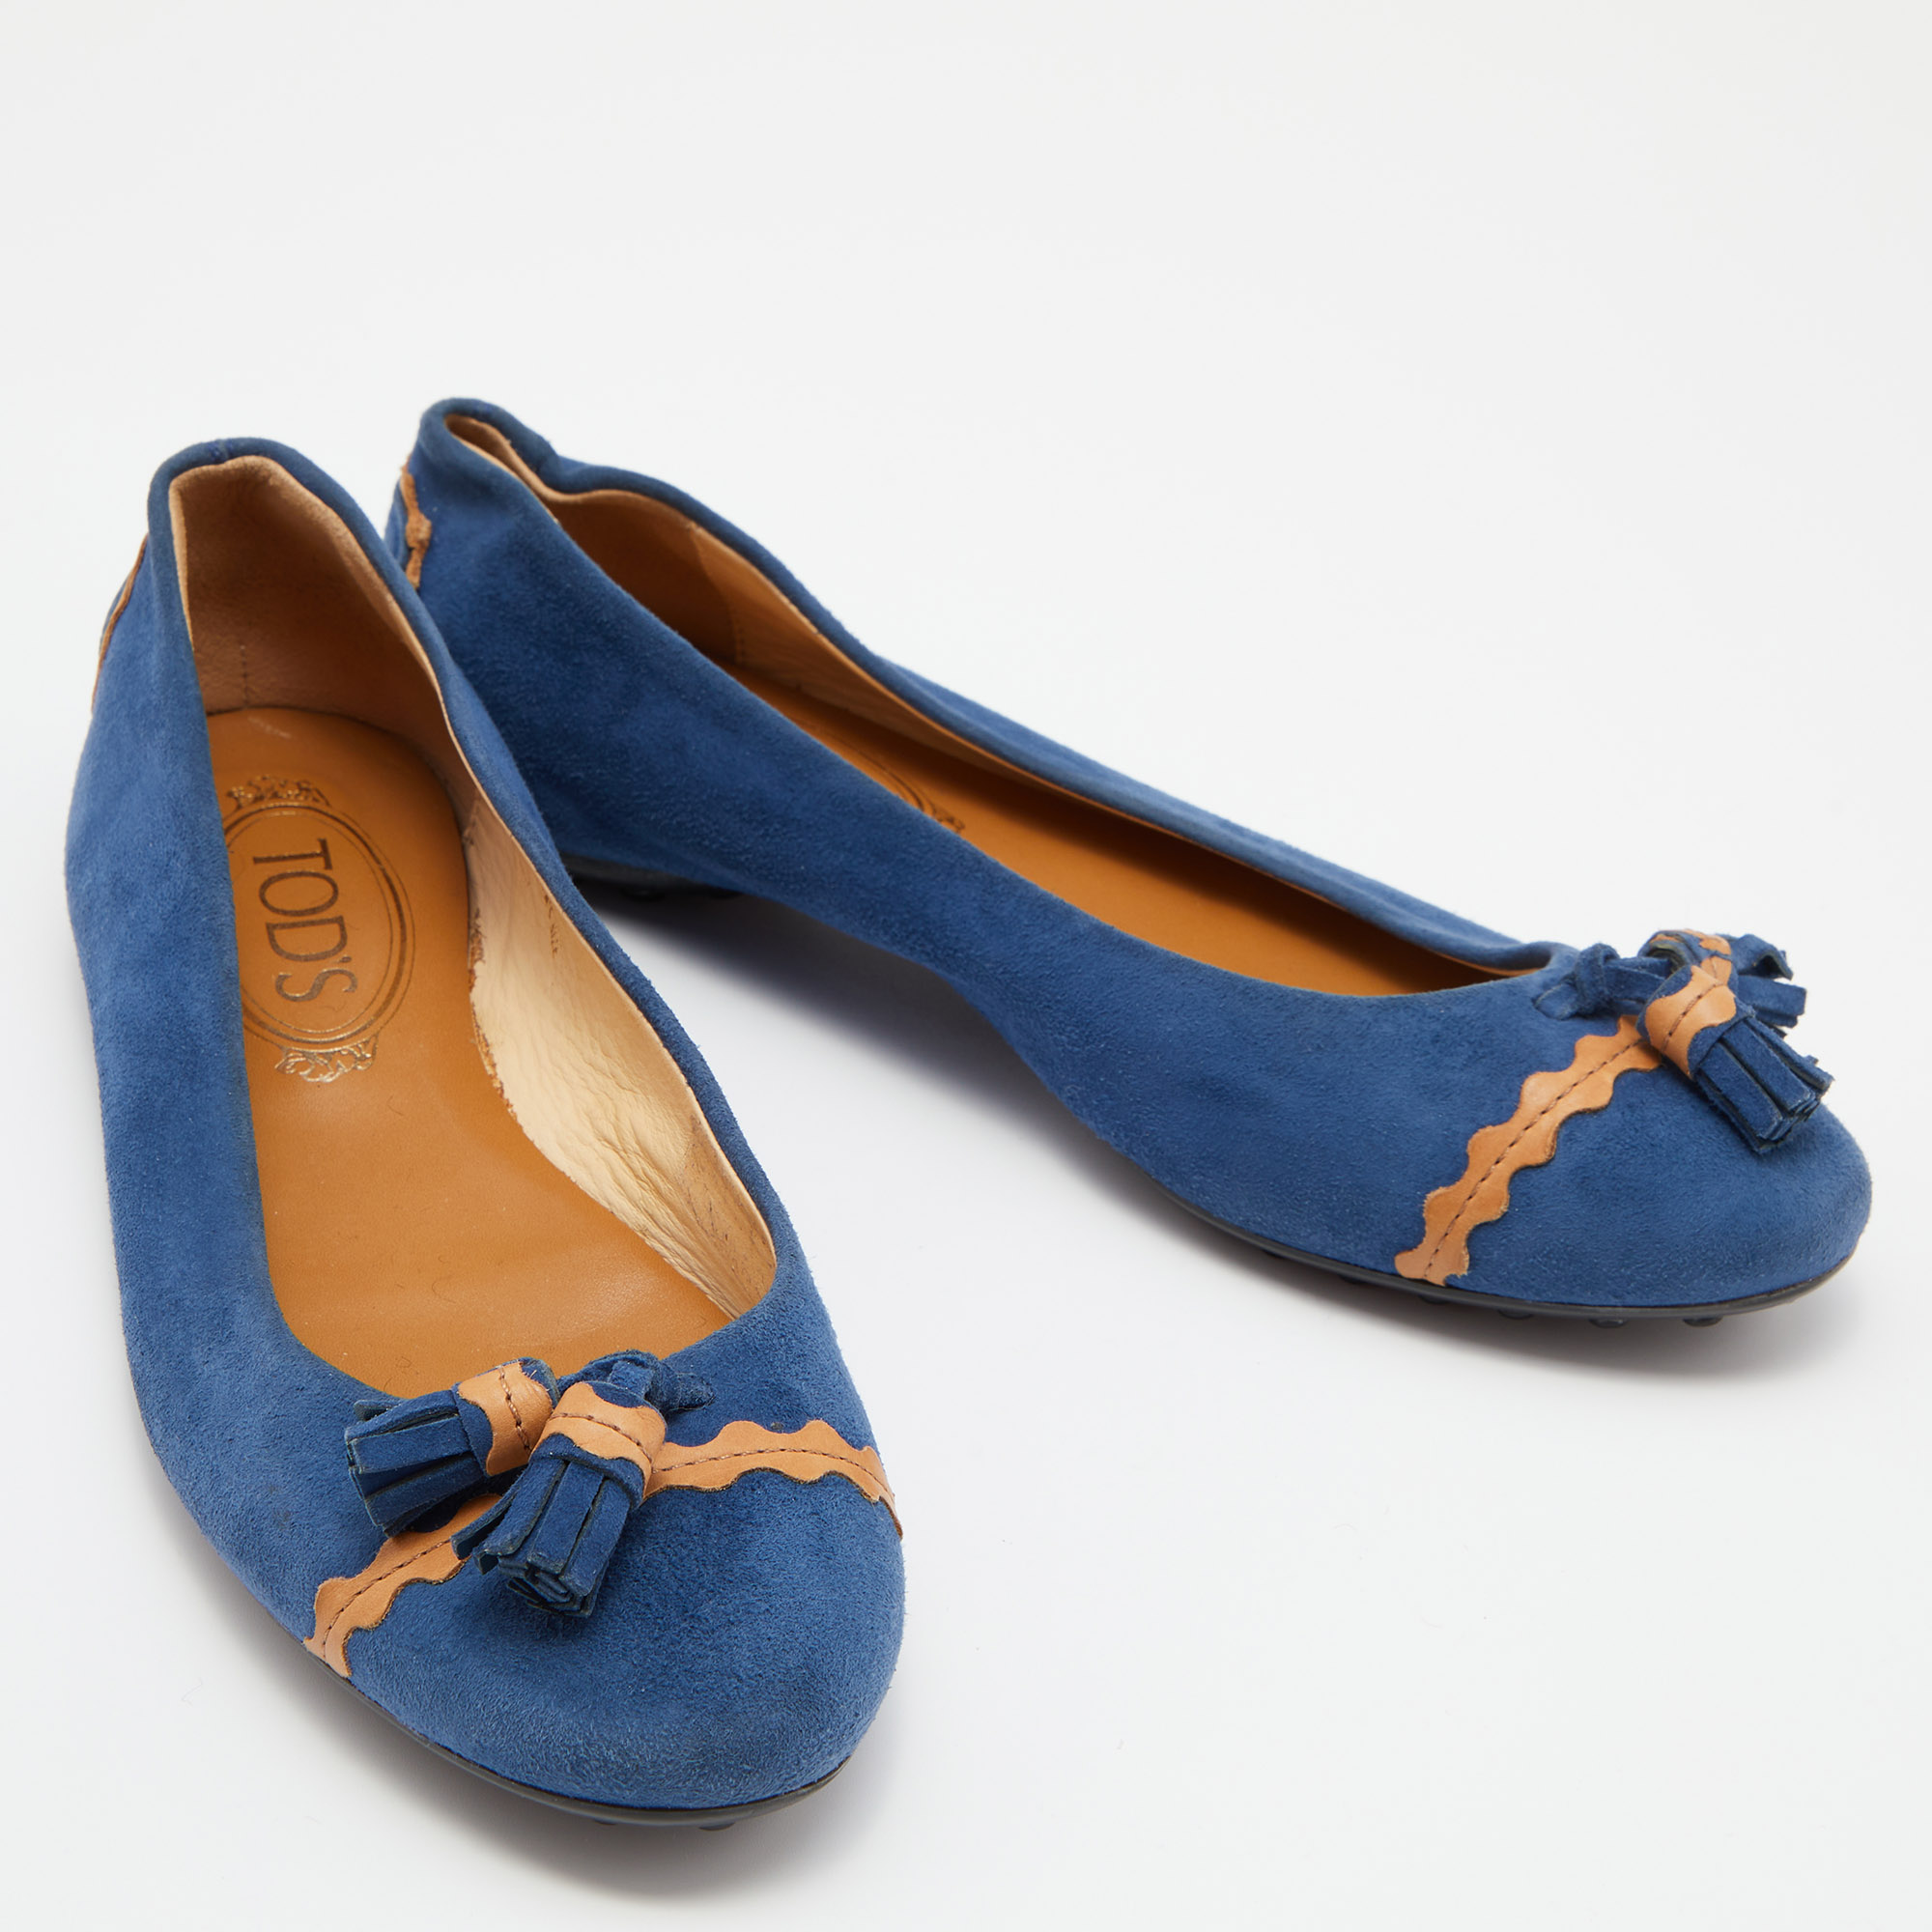 Tod's Blue/Tan Leather Tassel Ballet Flats Size 37